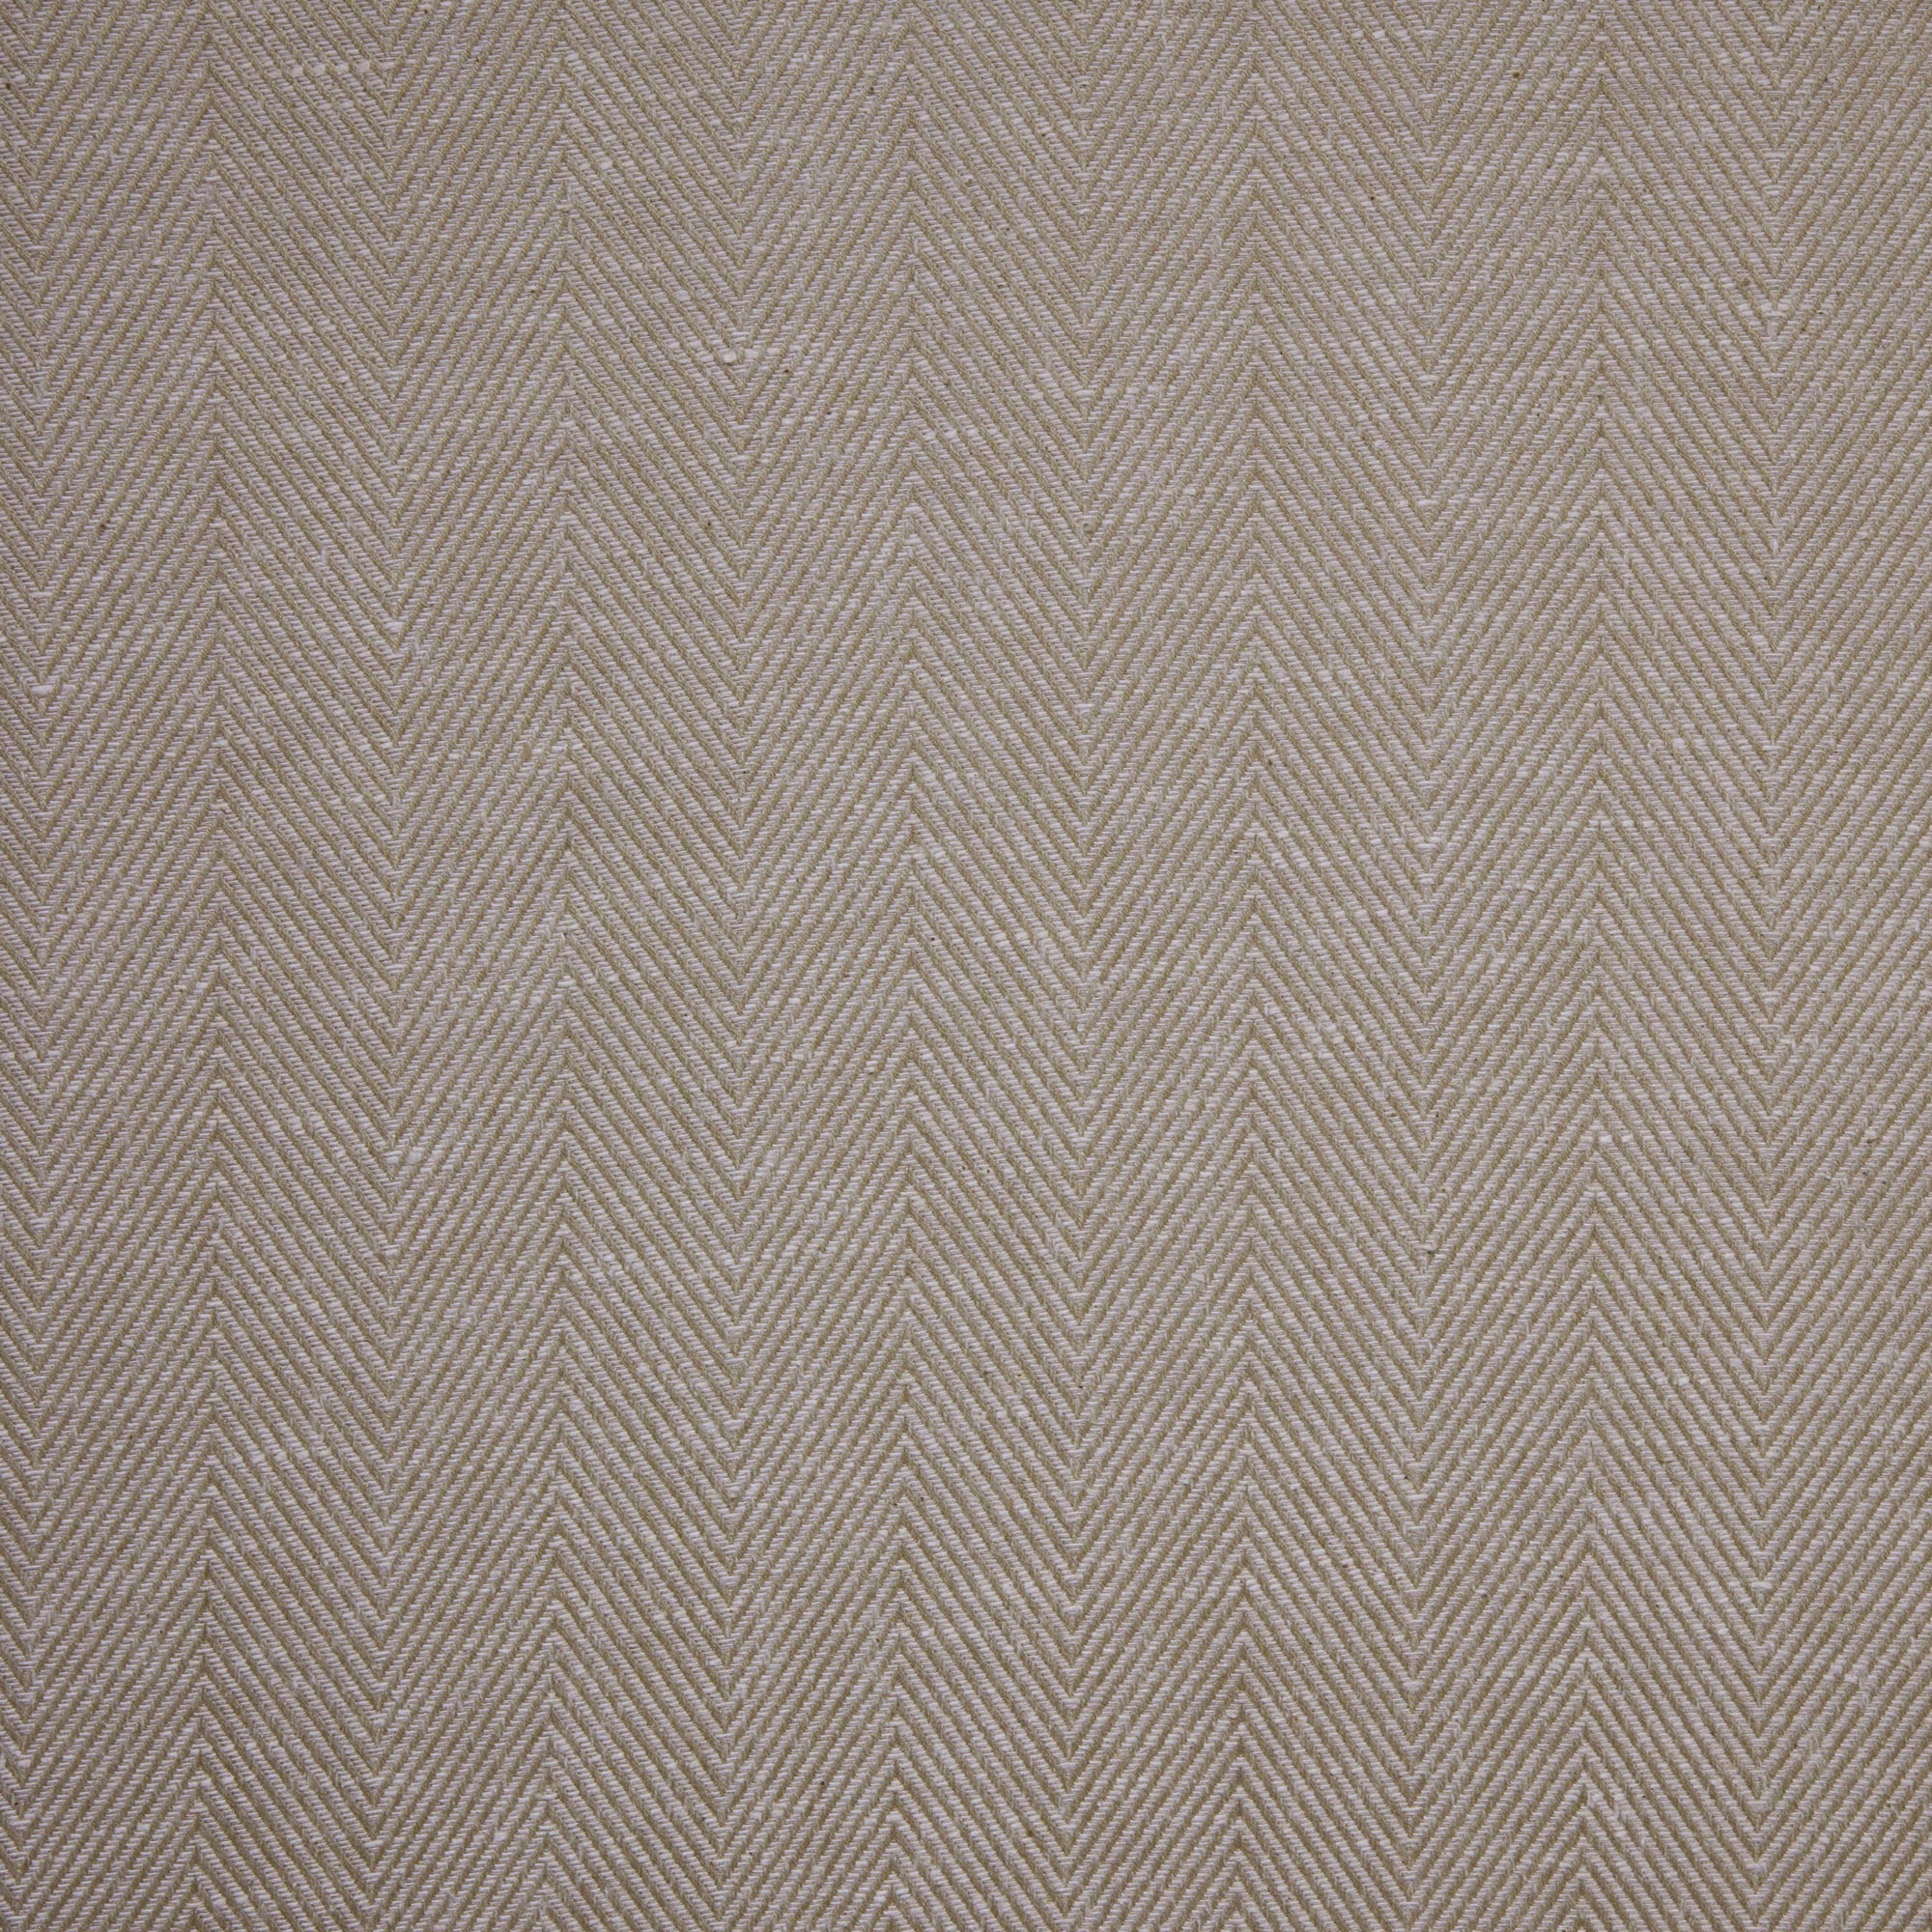 Ladakh Herringbone Upholstery Fabric - Sand Swatch 15cm x 15 cm